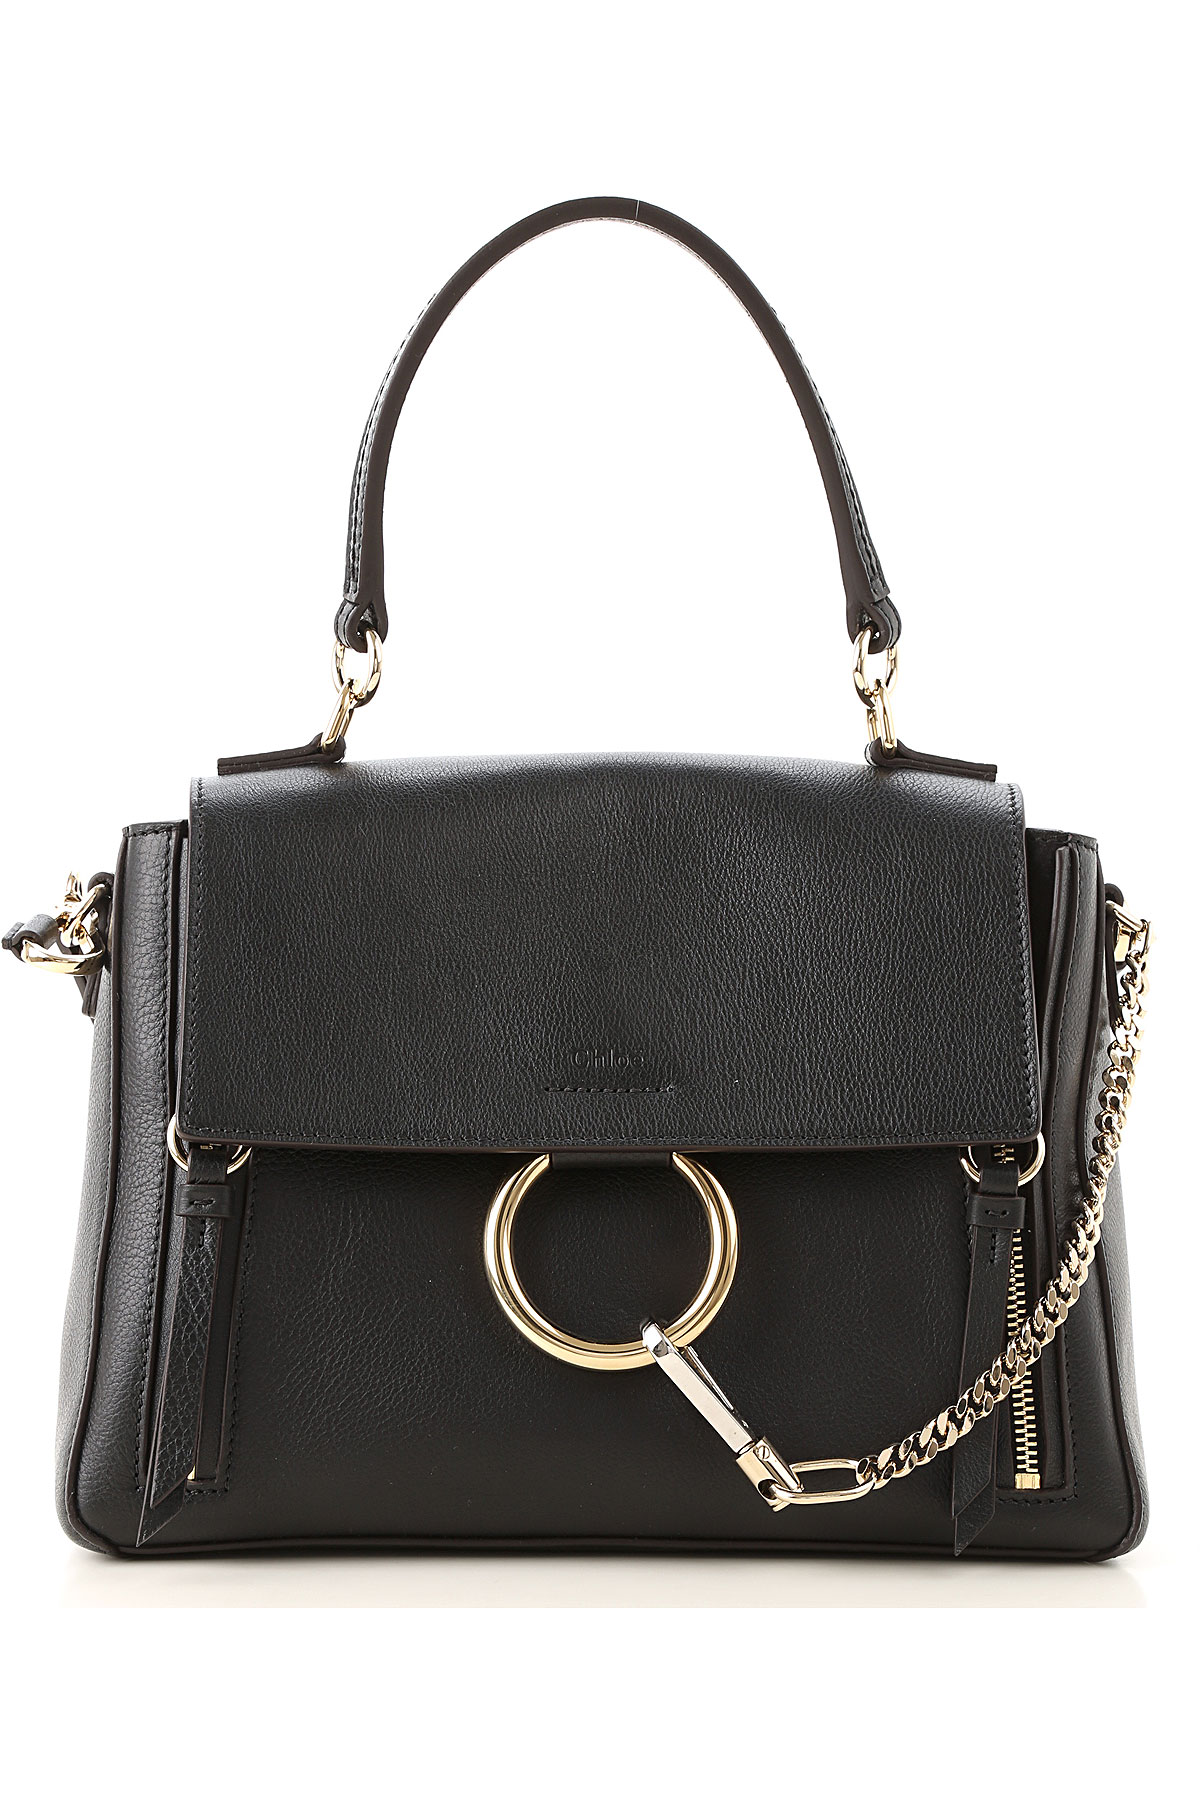 Handbags Chloe, Style code: chc17ws322hgj001-001-